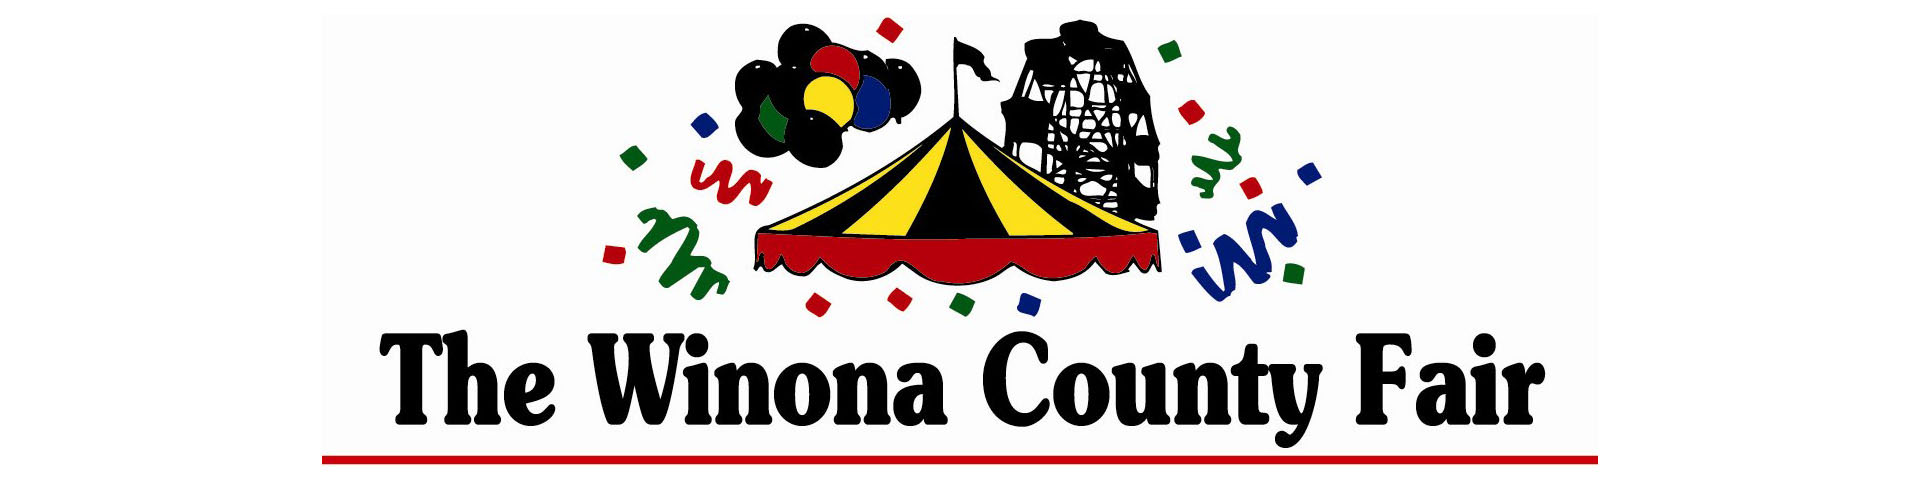 2019 Winona County Fair